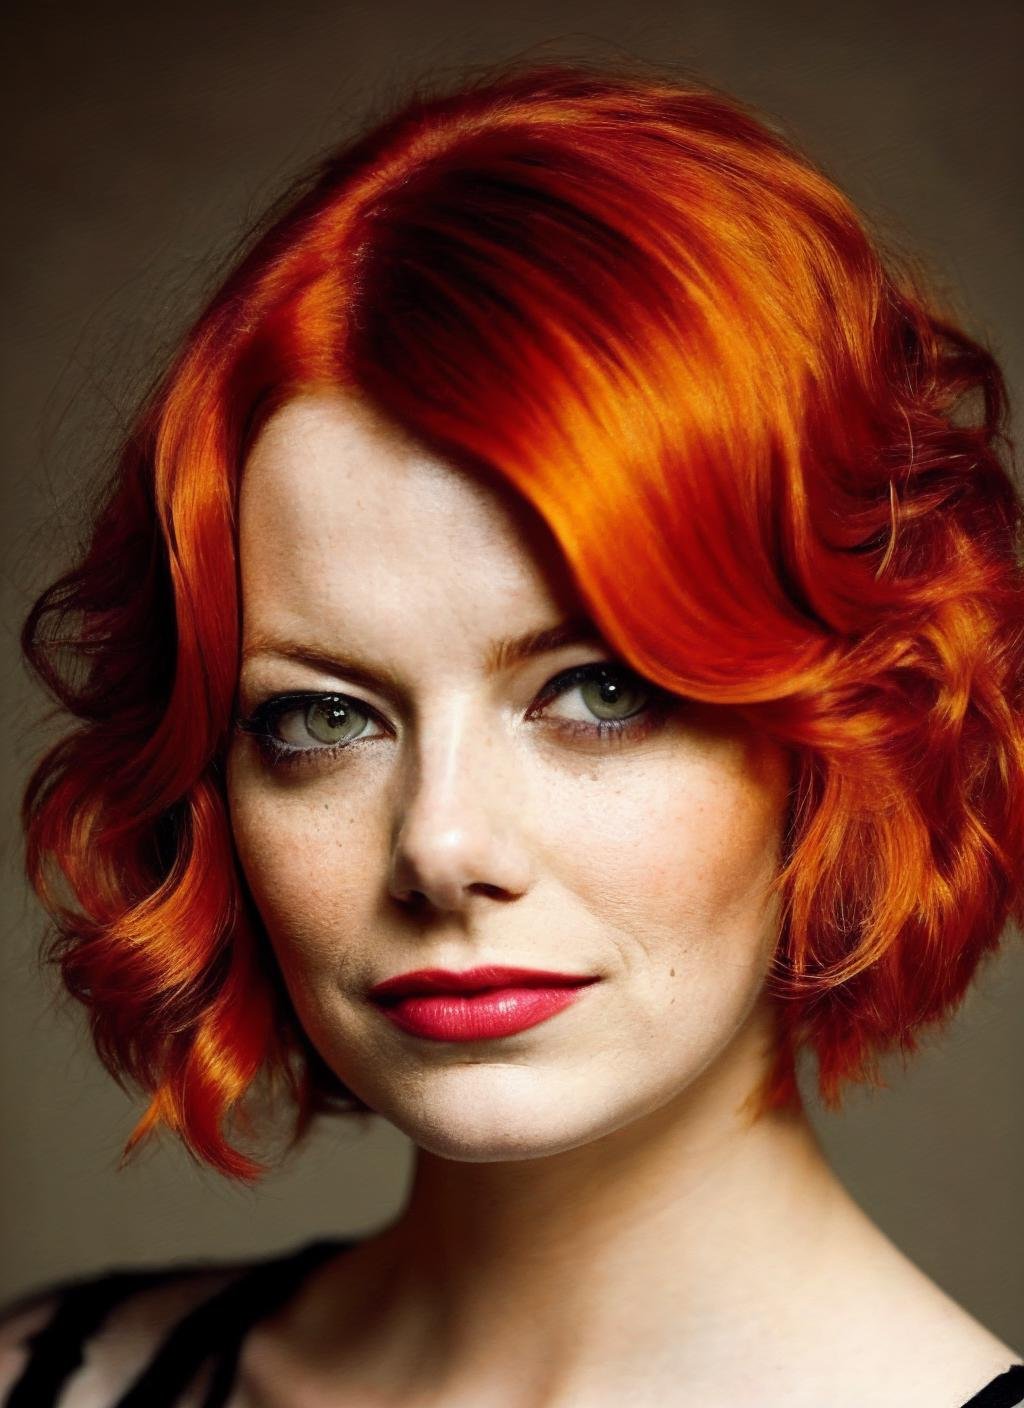 analog style, modelshoot style, portrait of sks woman by Flora Borsi, style by Flora Borsi, bold, bright colours, orange Mohawk haircut, ((Flora Borsi)), <lora:locon_emmastone_v1_from_v1_64_32:1.4>